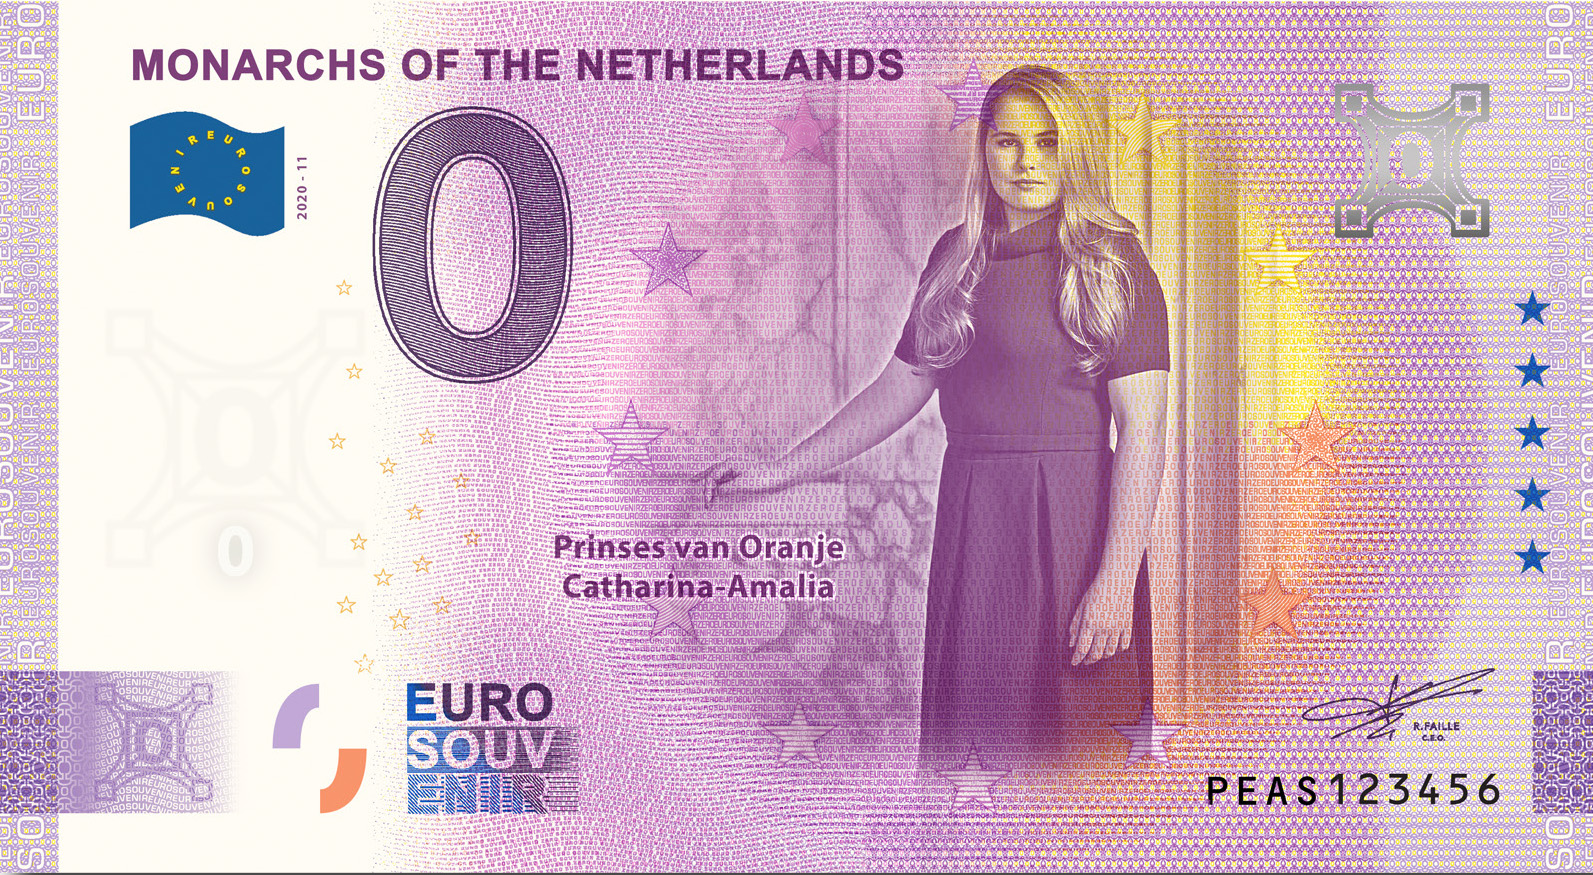 2020-11 NETHERLANDS PEAS MONARCH PRINSES AMALIA EURO BILLET SOUVENIR EURO SCHEIN 